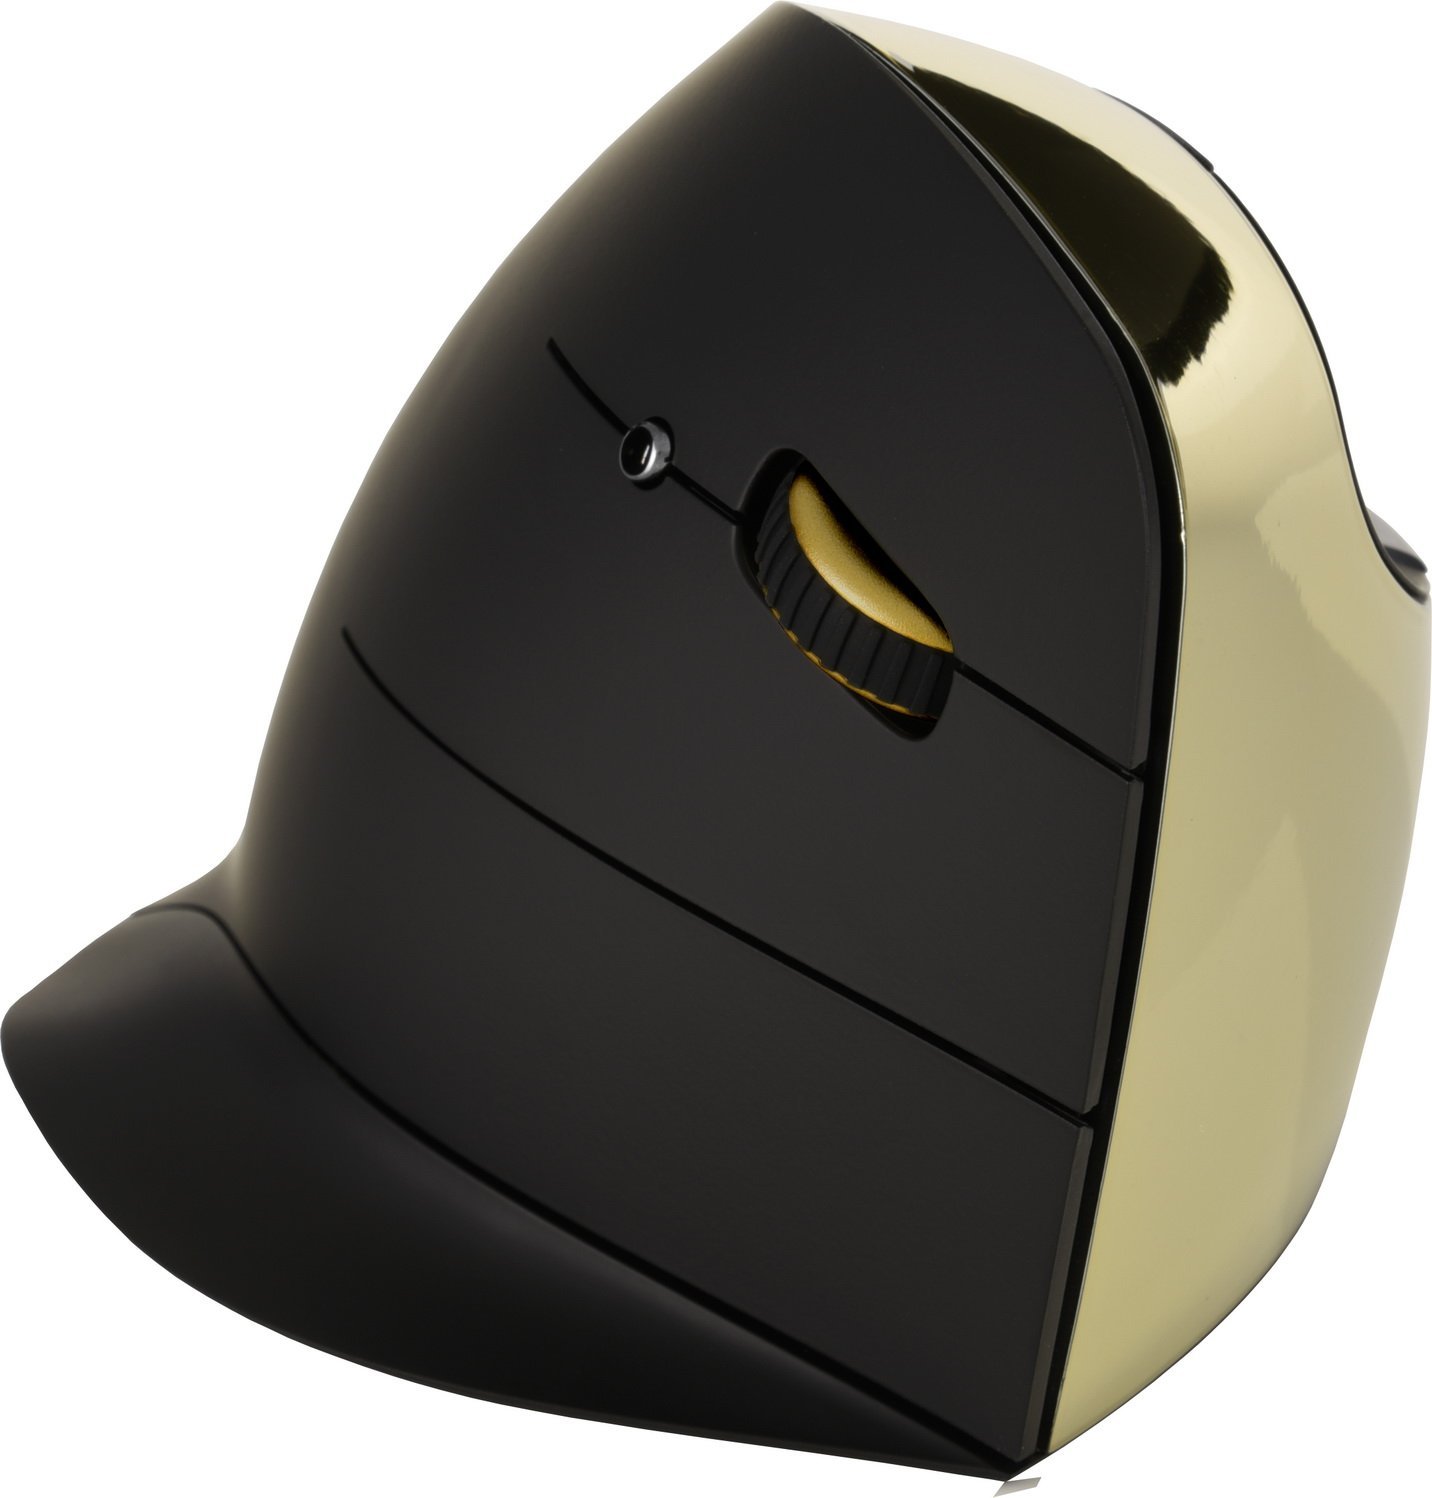 Evoluent VMOUSCRWG - Ratón vertical inalámbrico para mano derecha (5 botones 200 dpi) color dorado